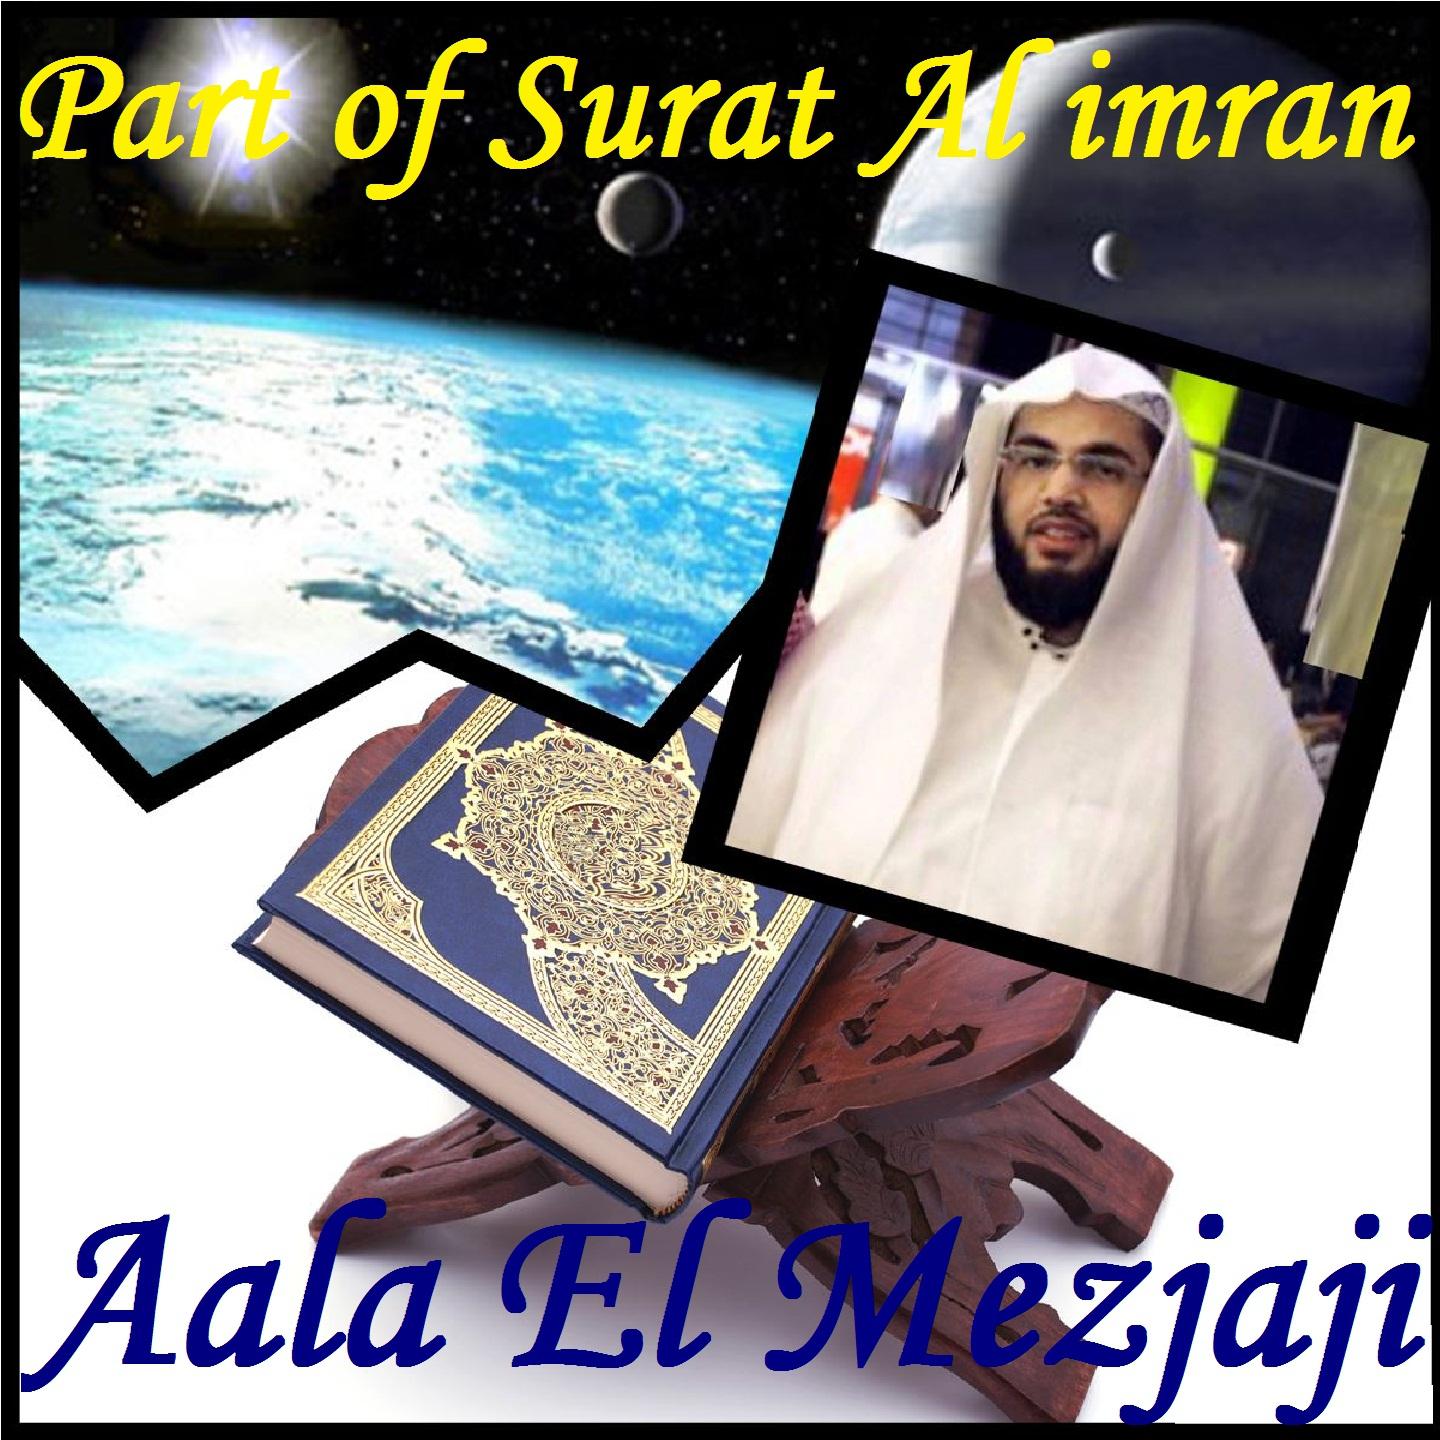 Постер альбома Part of Surat Al imran